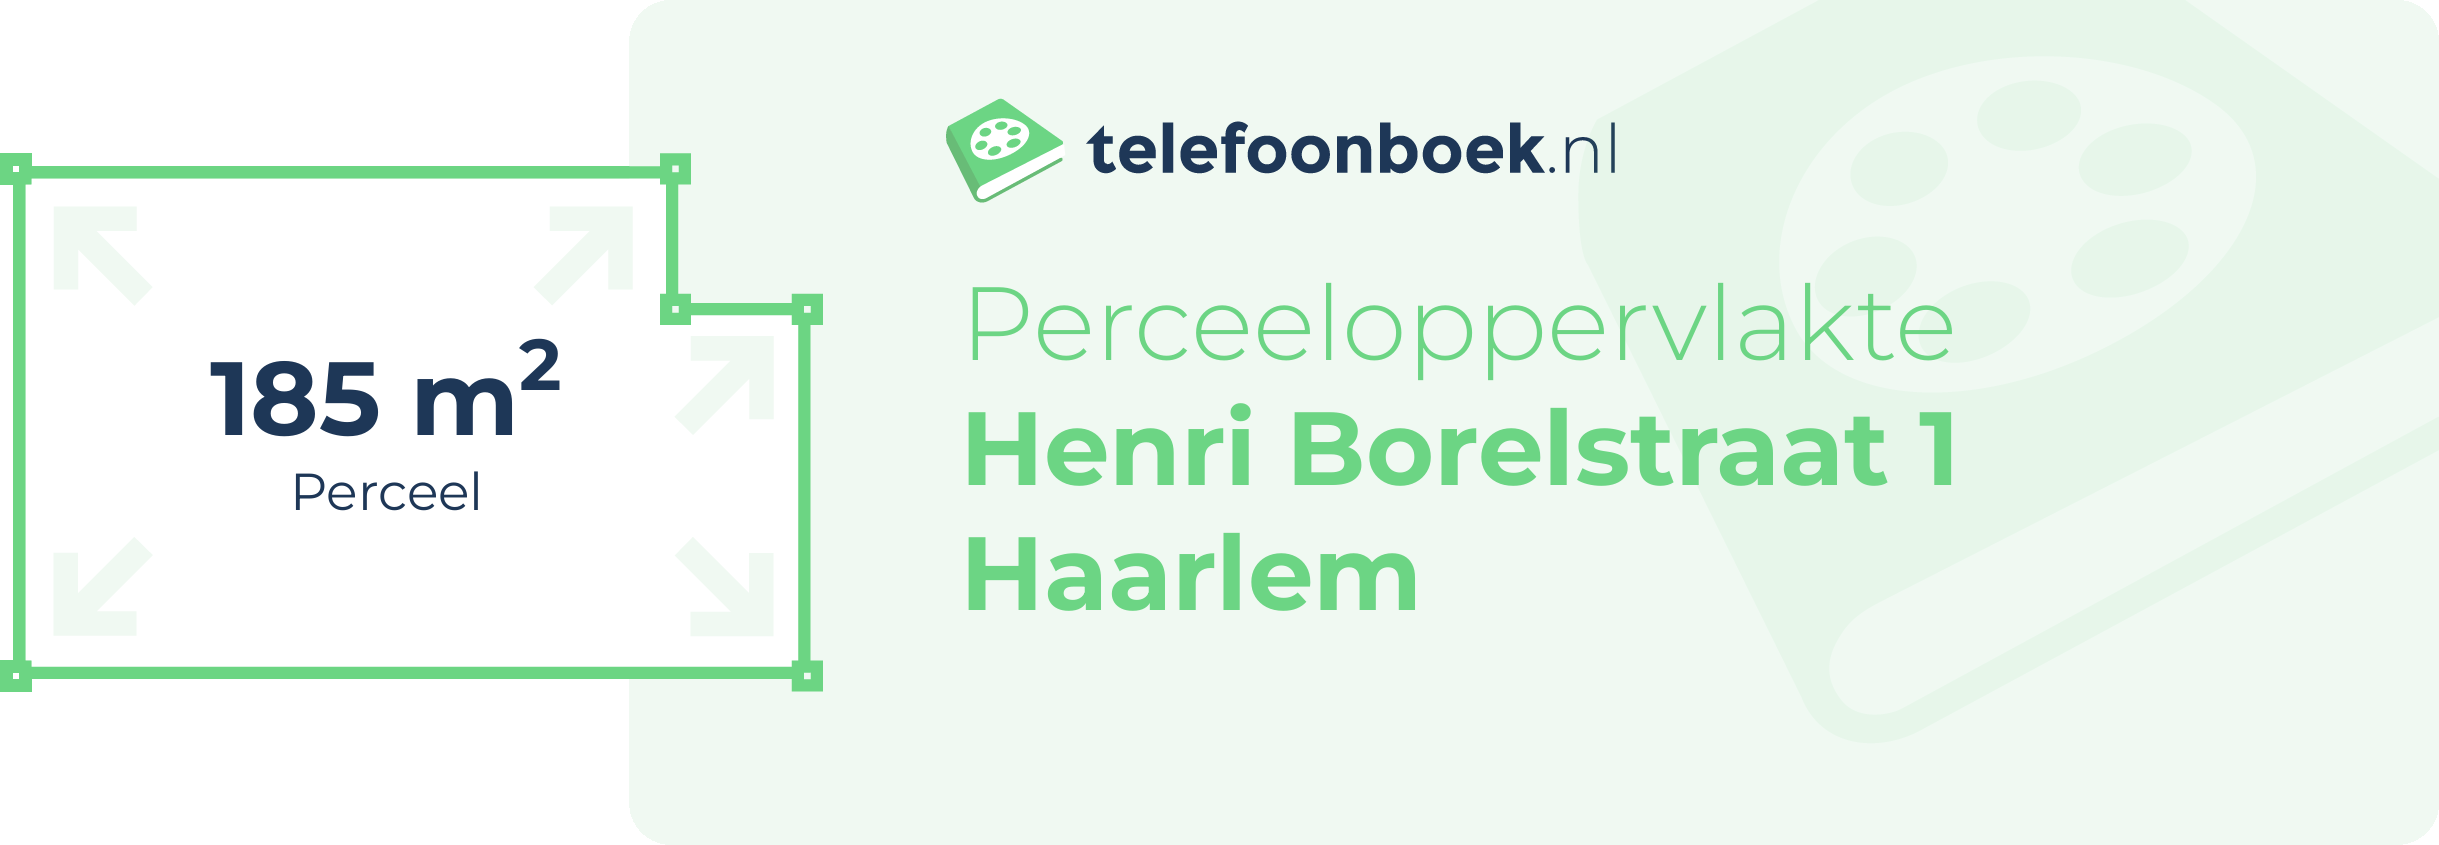 Perceeloppervlakte Henri Borelstraat 1 Haarlem